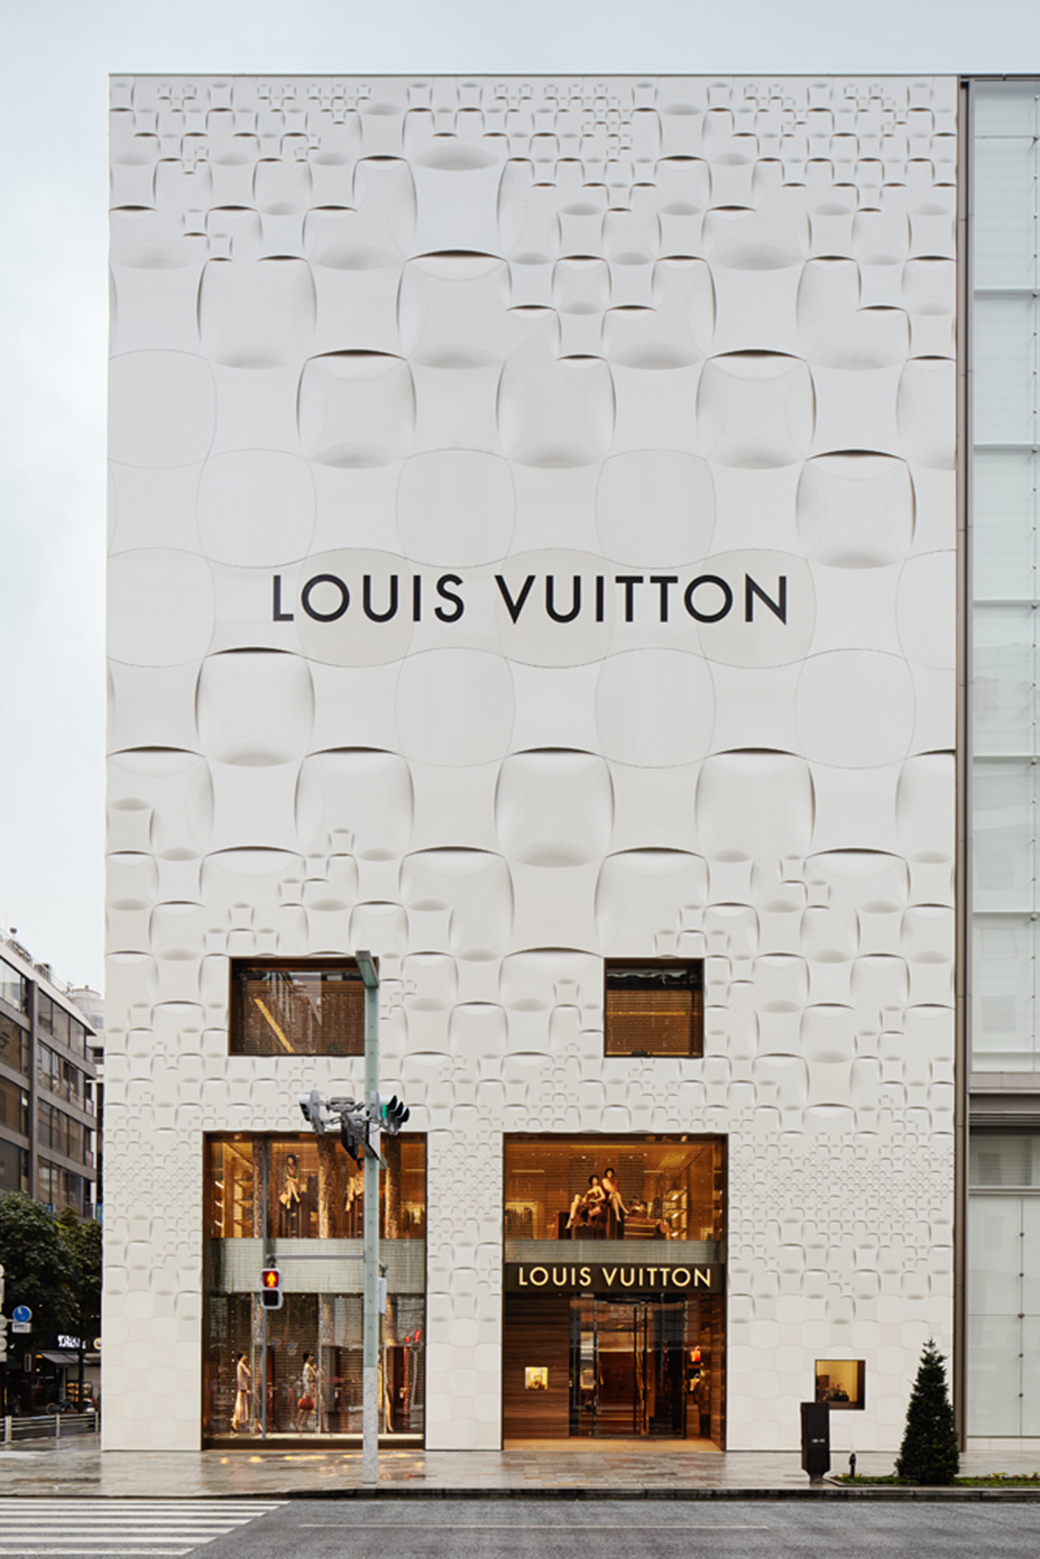 Louis Vuitton Designs - Unusual Accoya facade Latin America